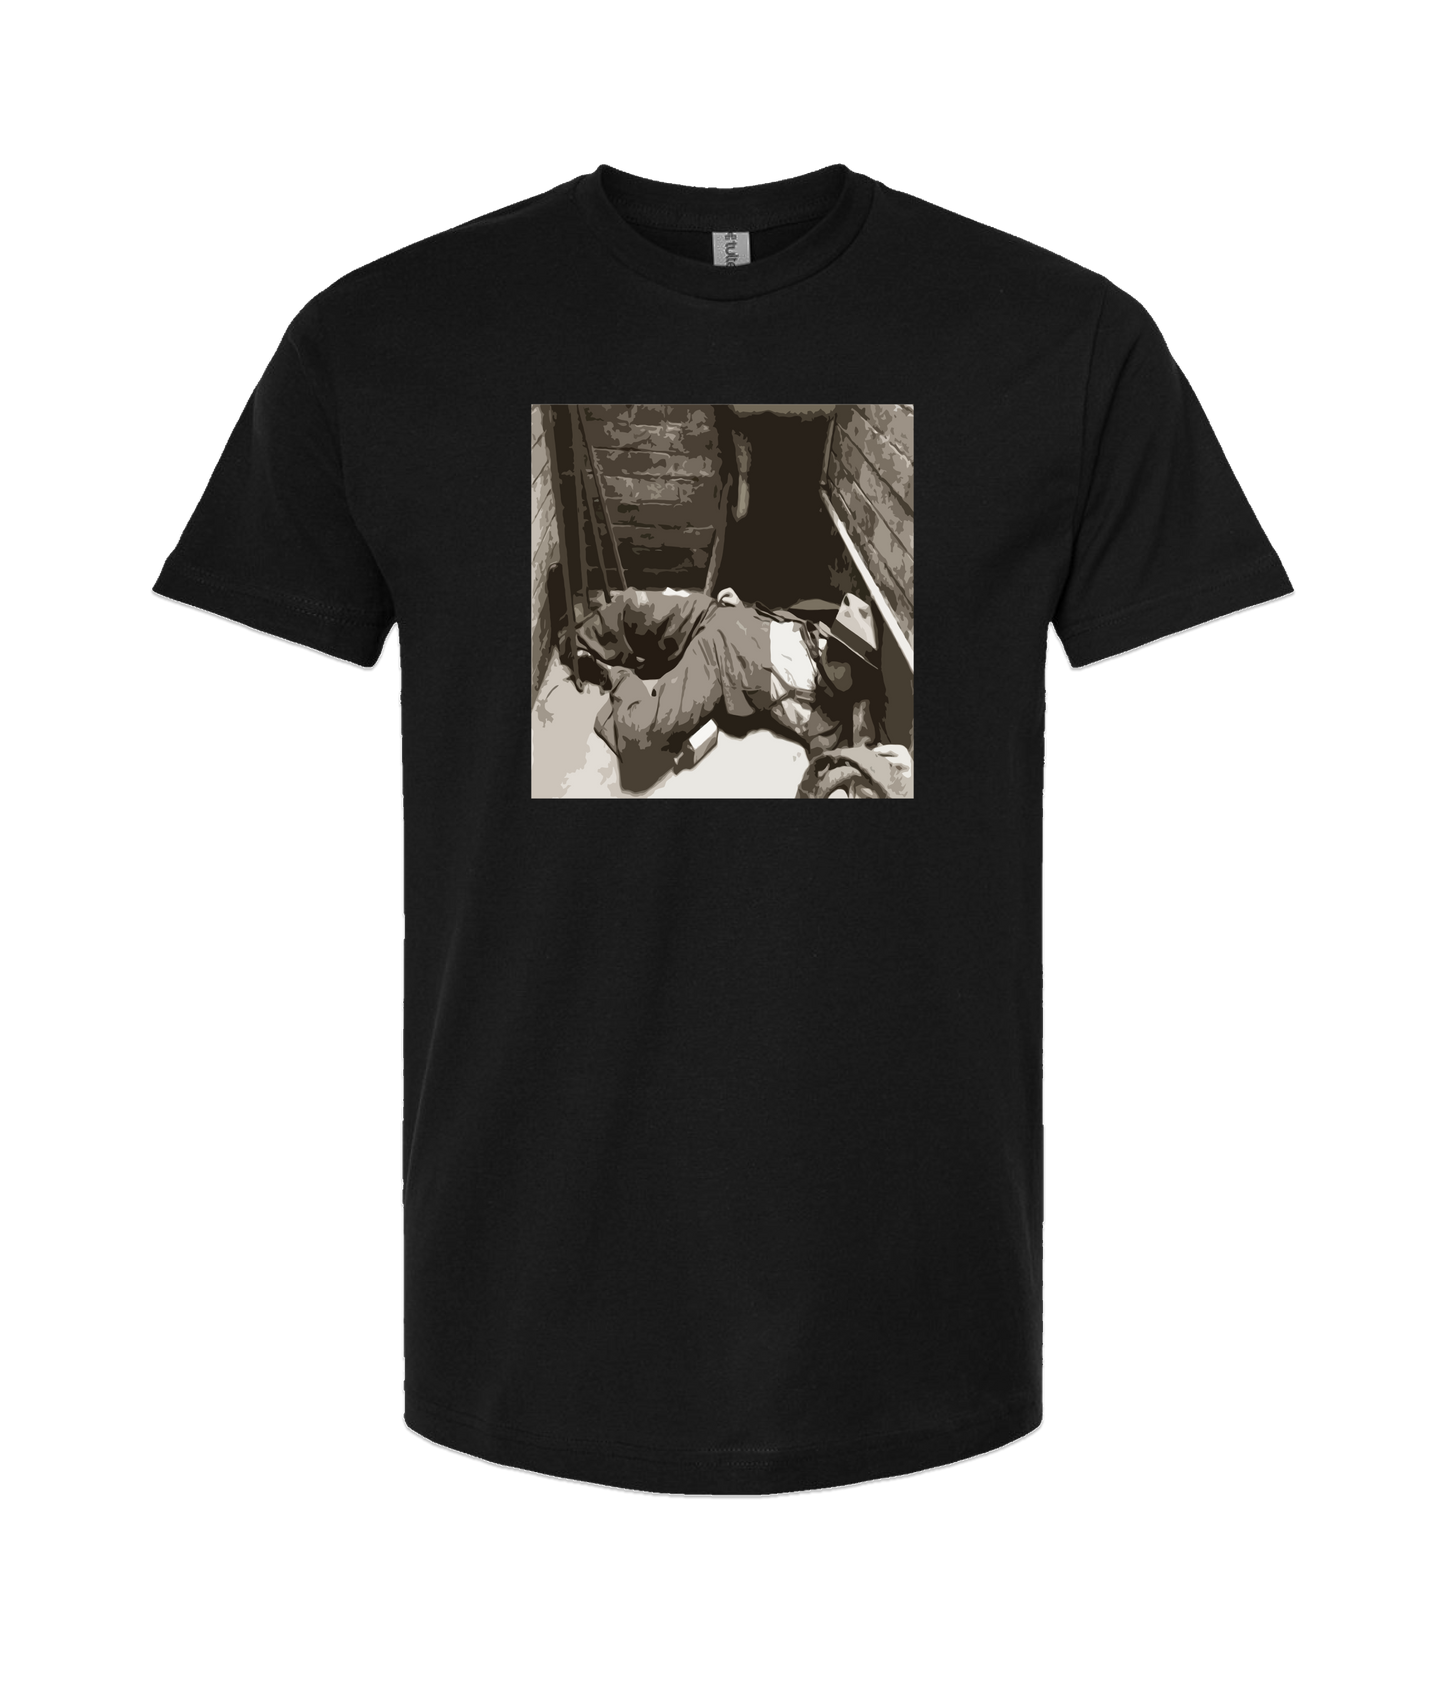 Sincrawford - Man Down - Black T-Shirt